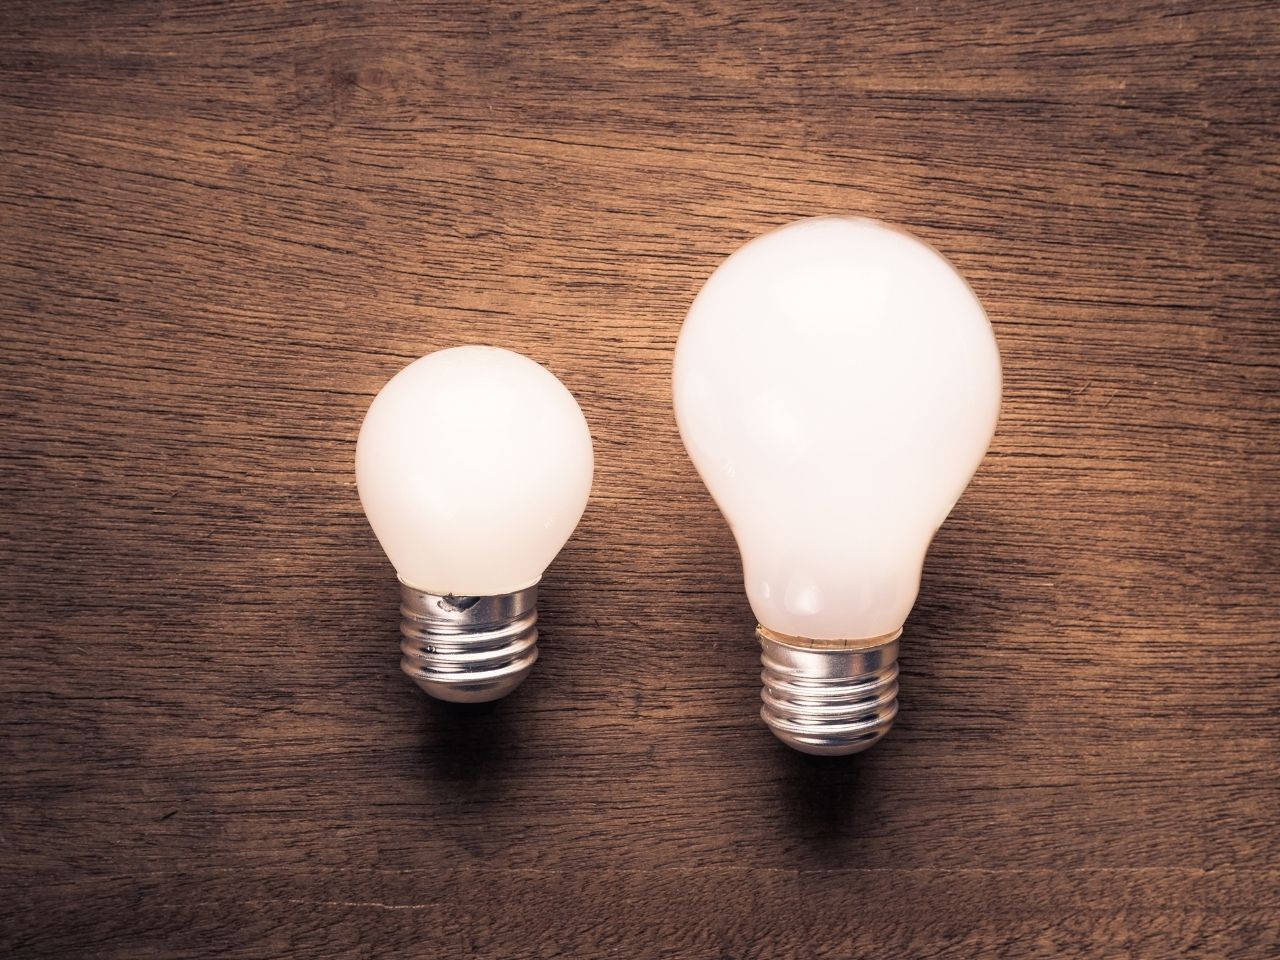 Small and medium light bulbs